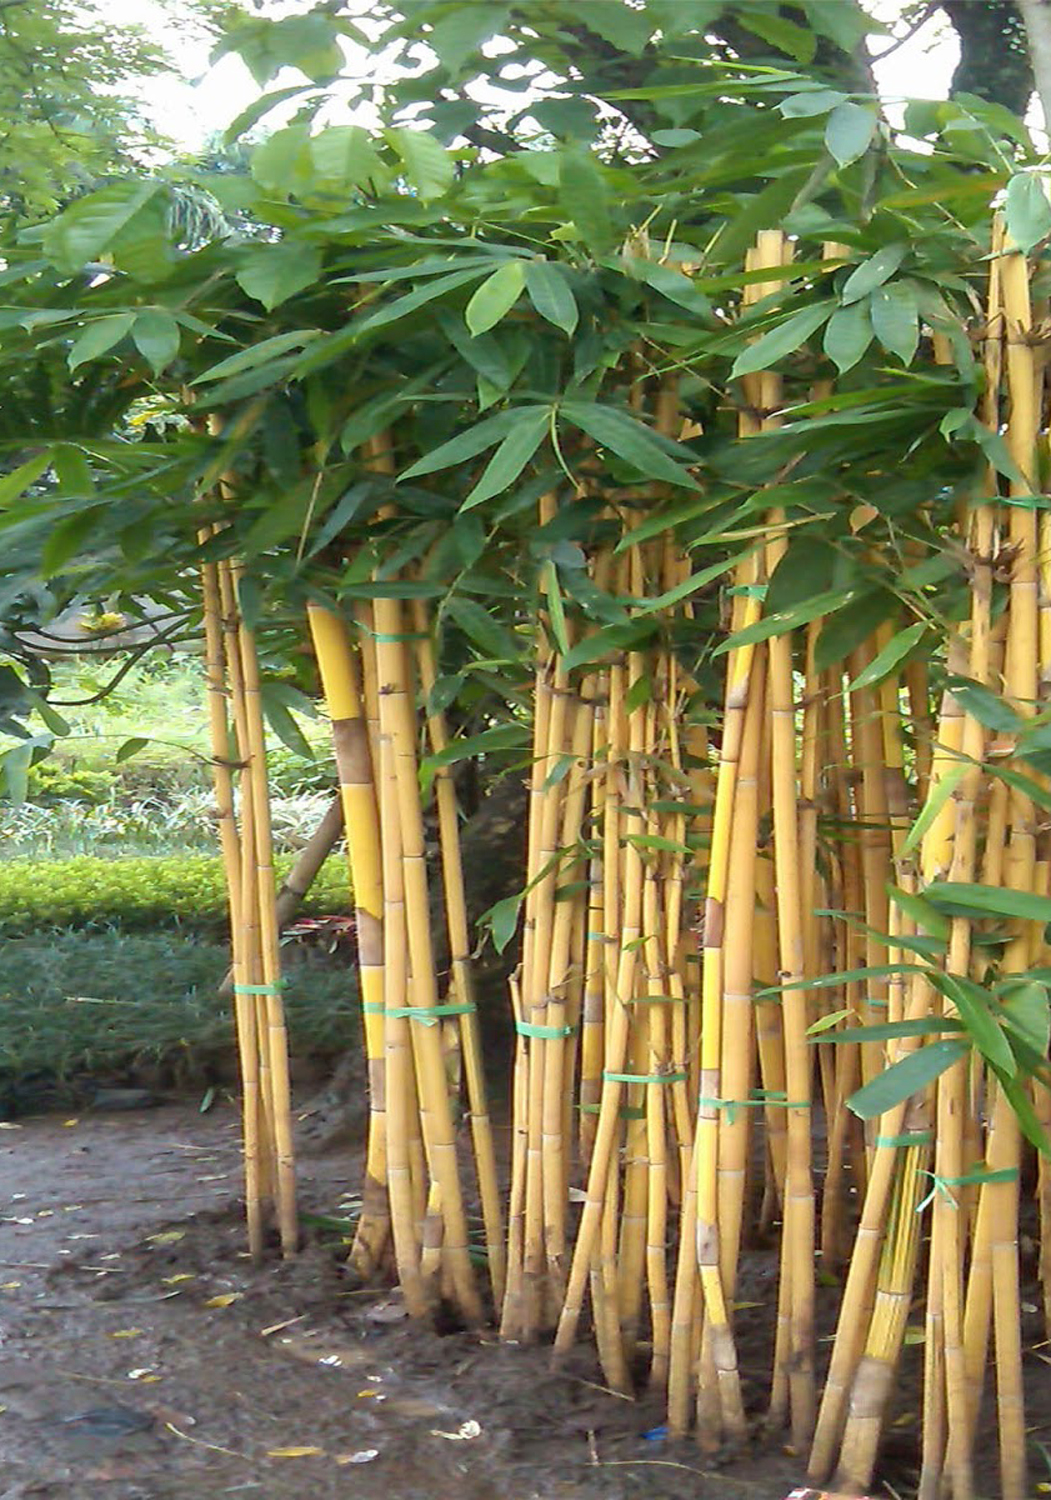  bambu  hias  jual bambu  hias  tukang bambu  hias  bambu  